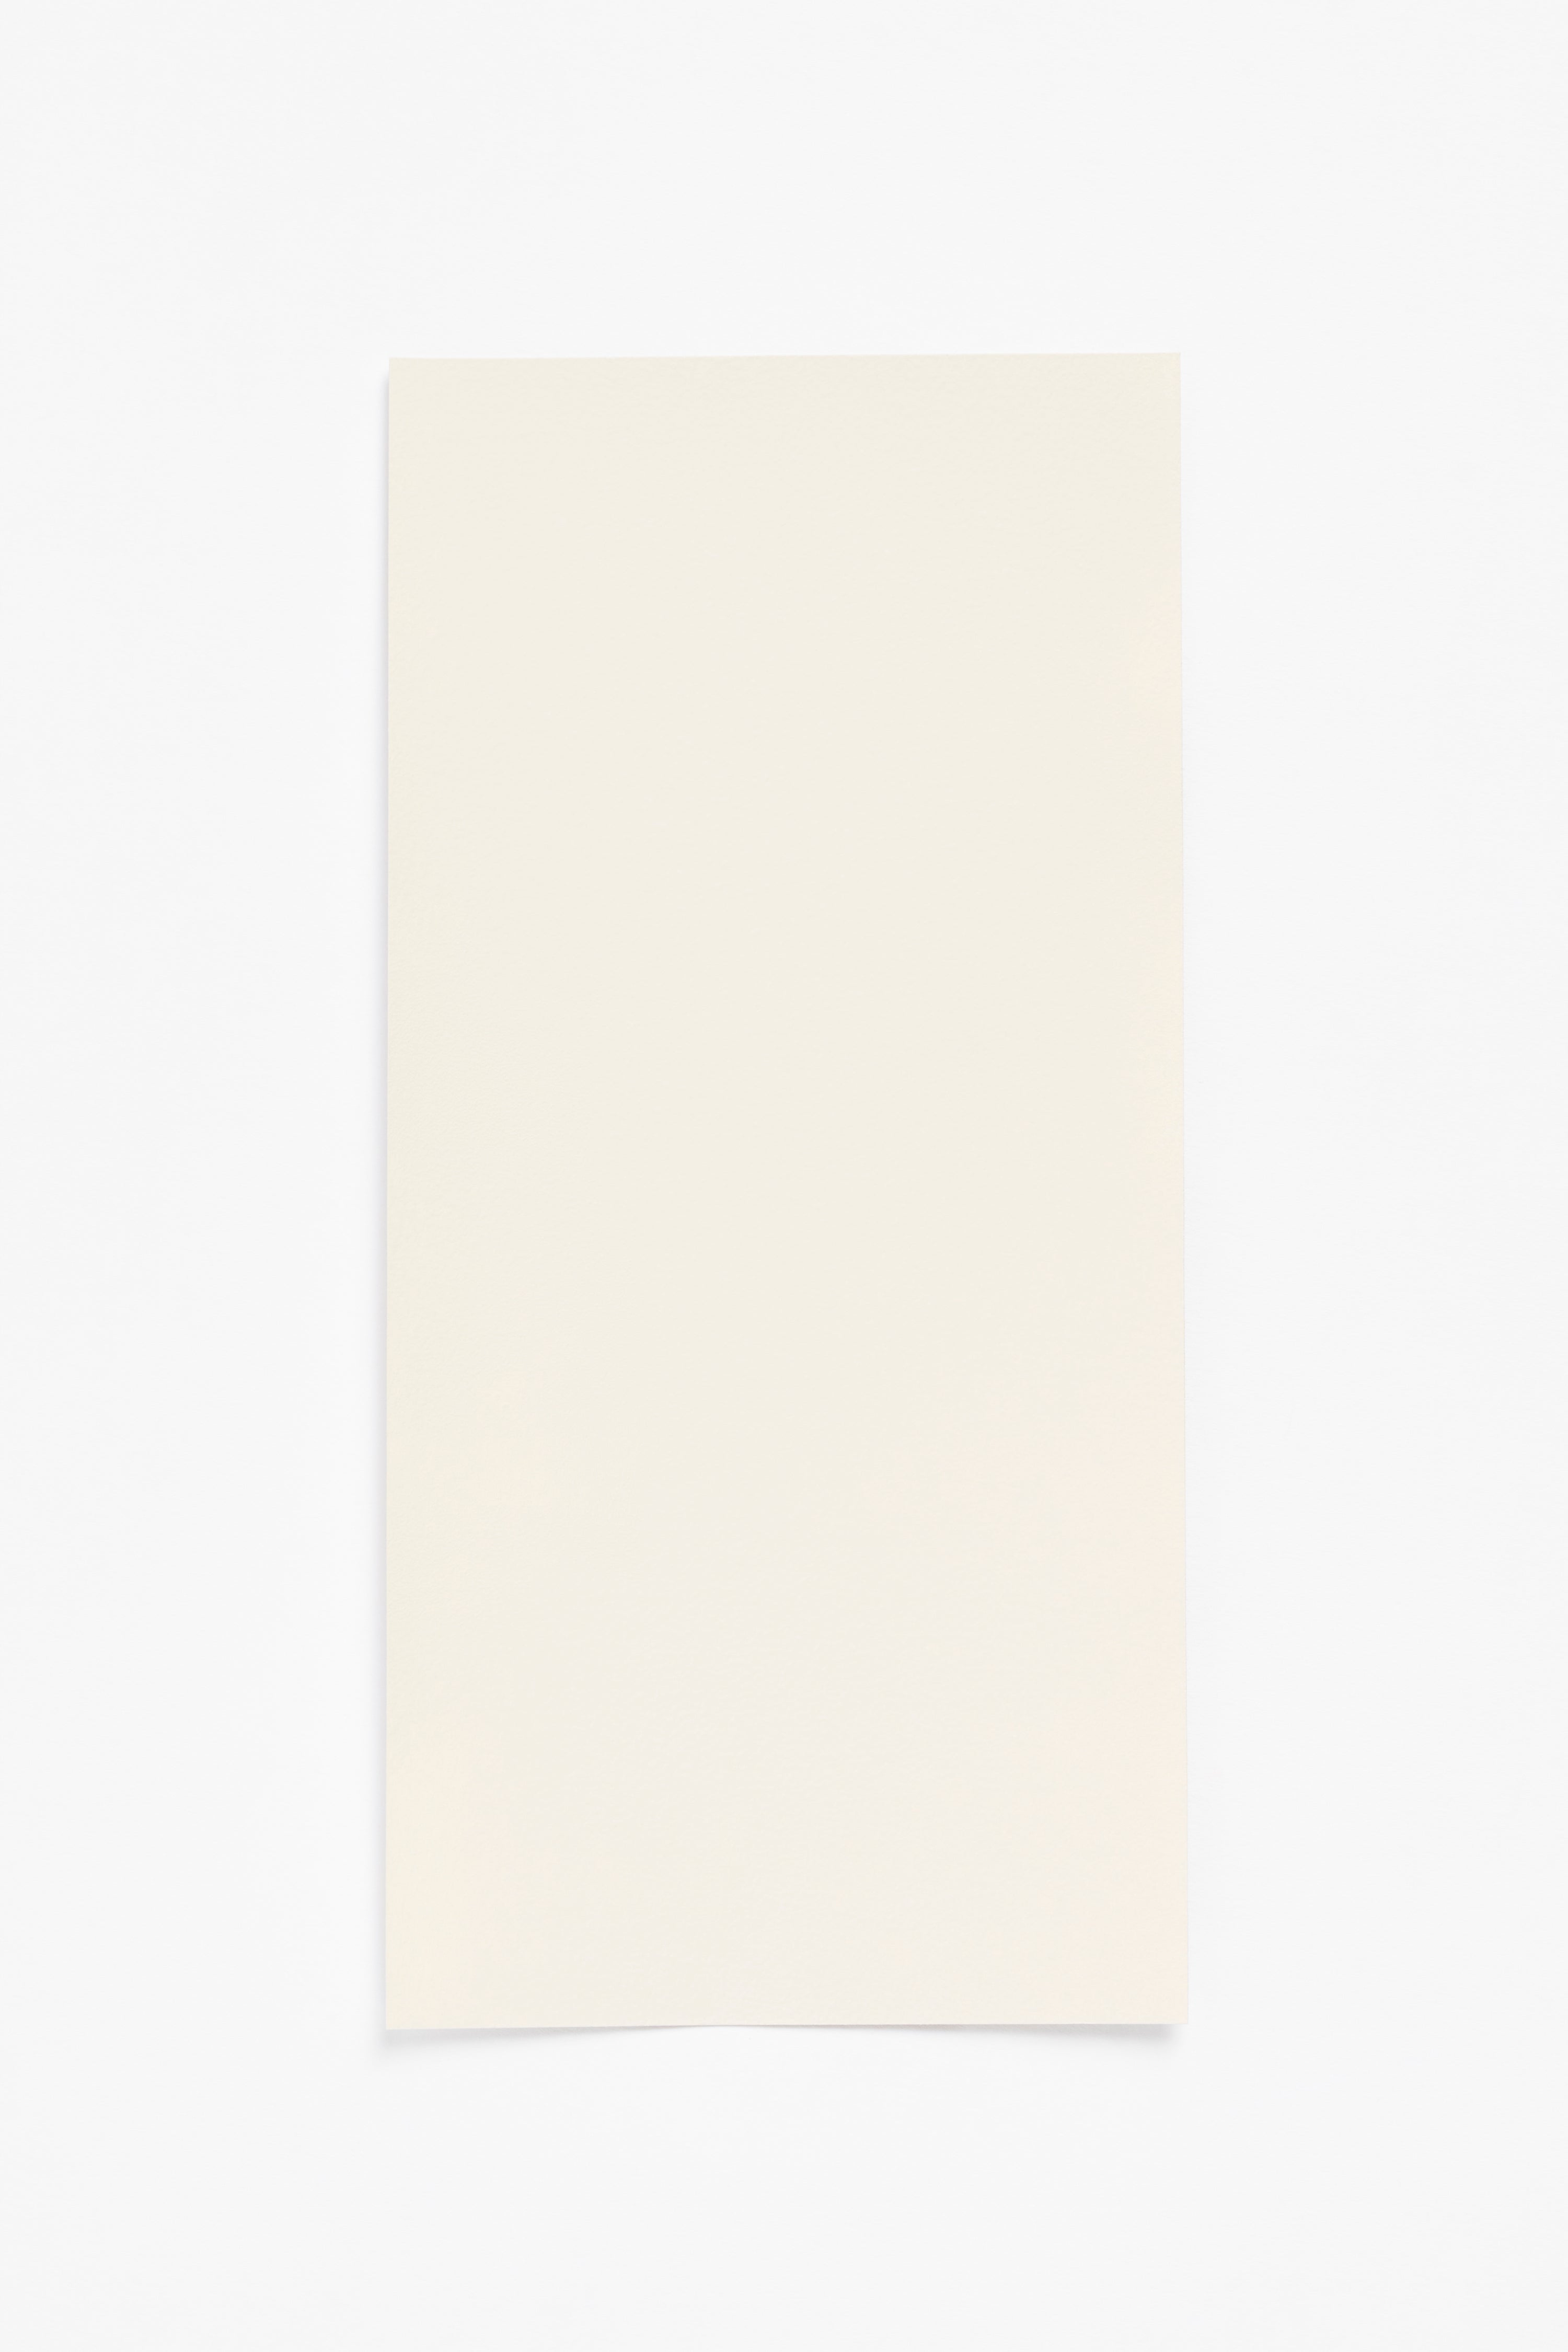 Ivory — a paint colour developed by Muller Van Severen for Blēo